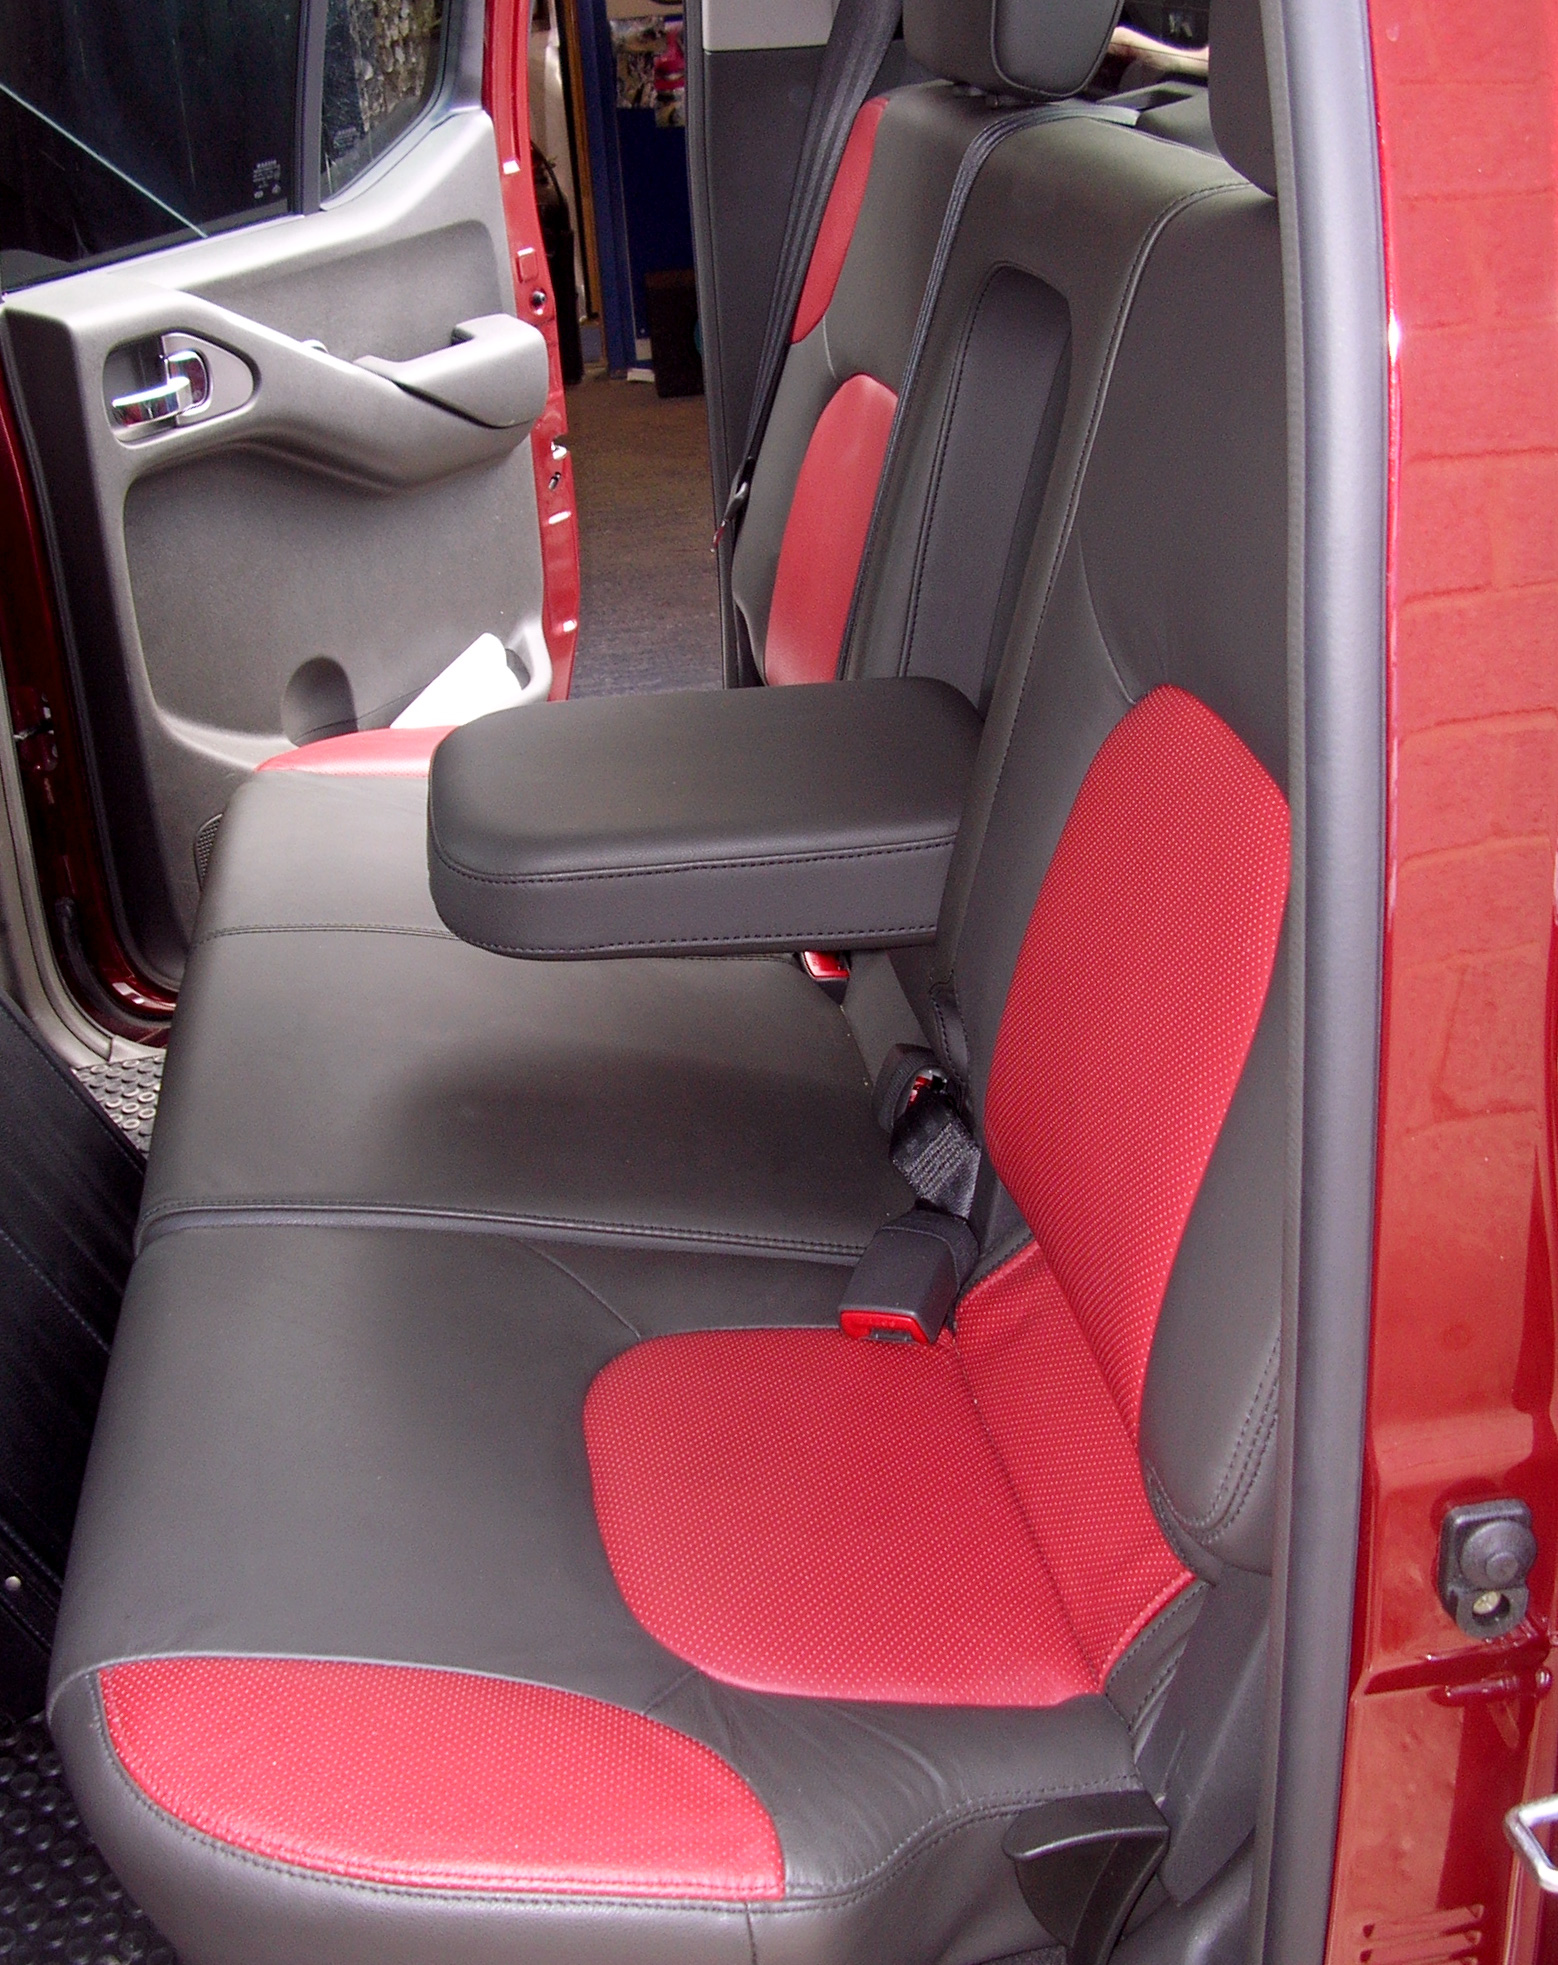 Red+and+grey+van+seating